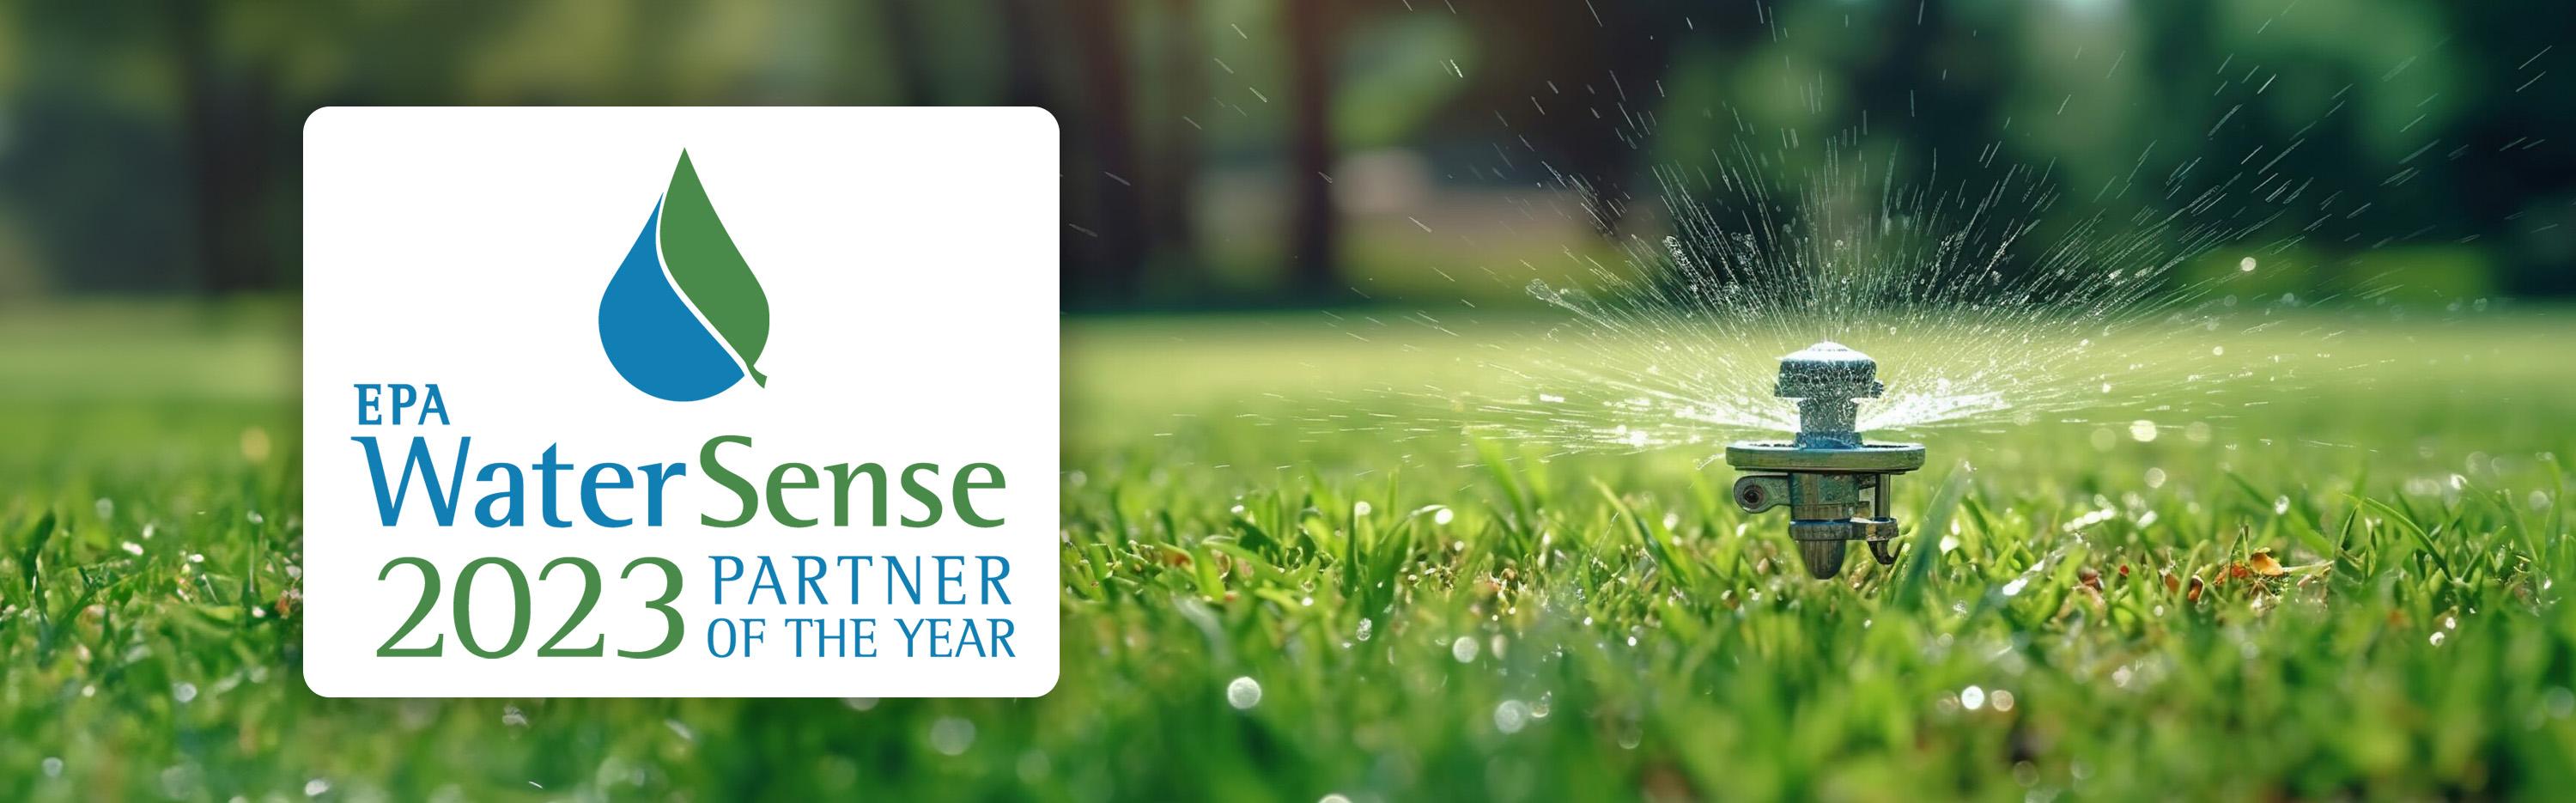 WaterSense logo in front of a lawn sprinkler